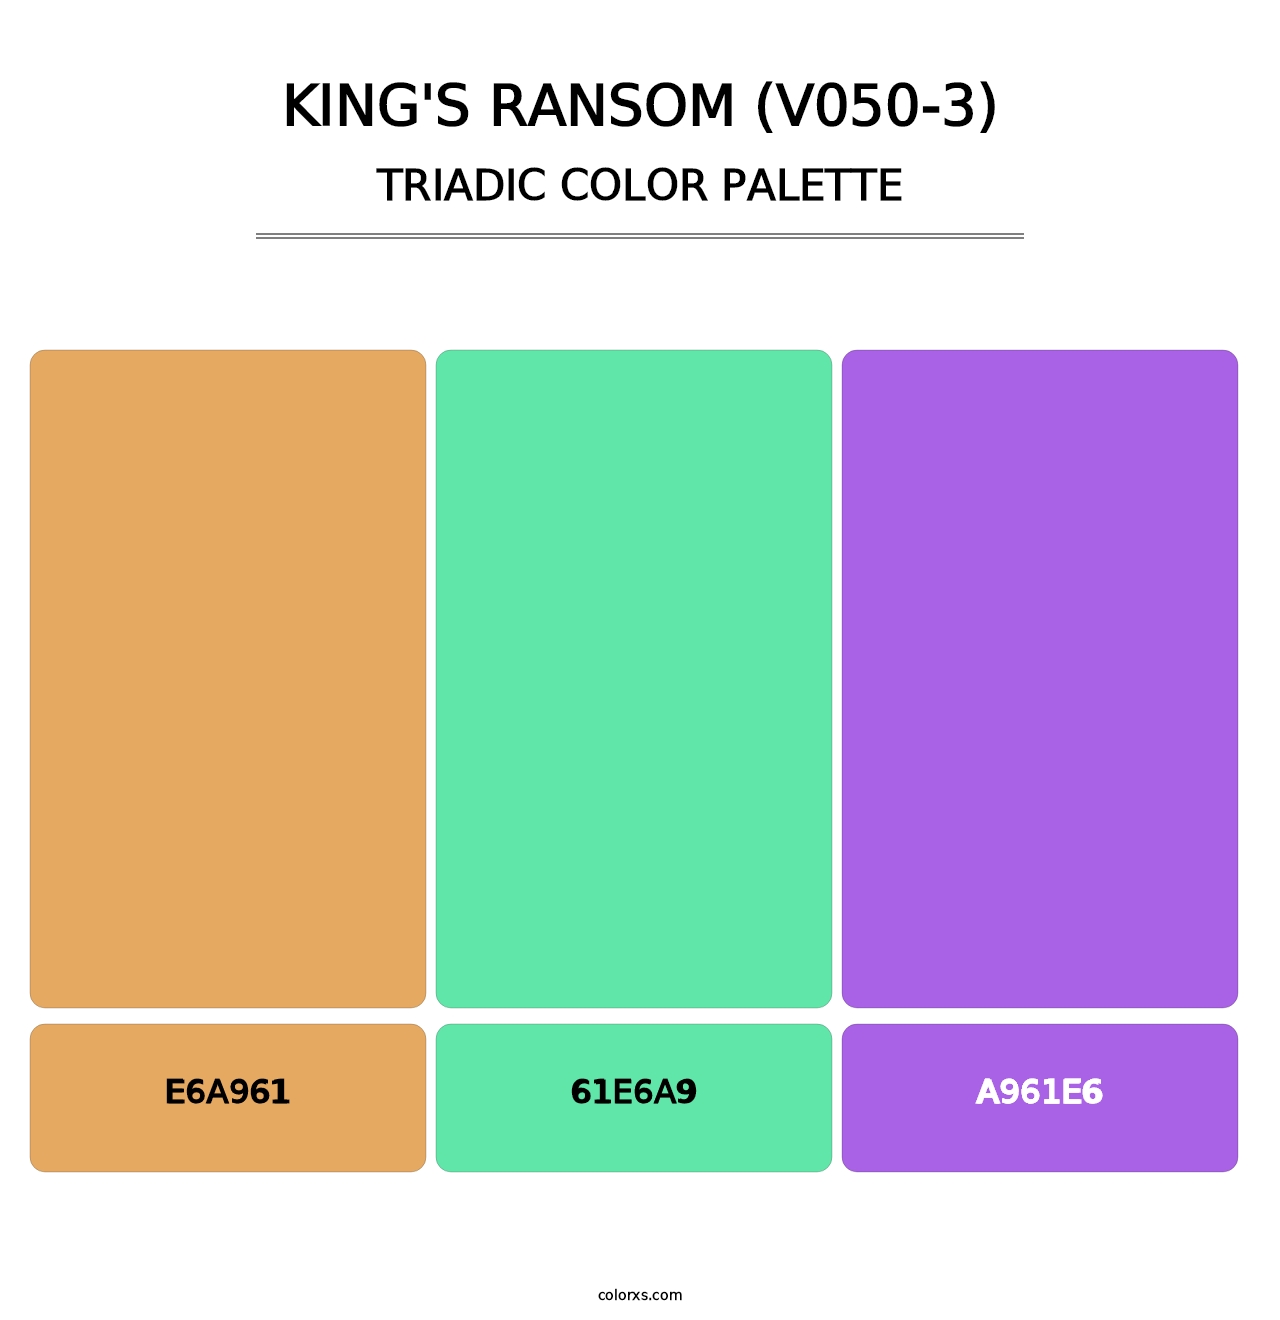 King's Ransom (V050-3) - Triadic Color Palette